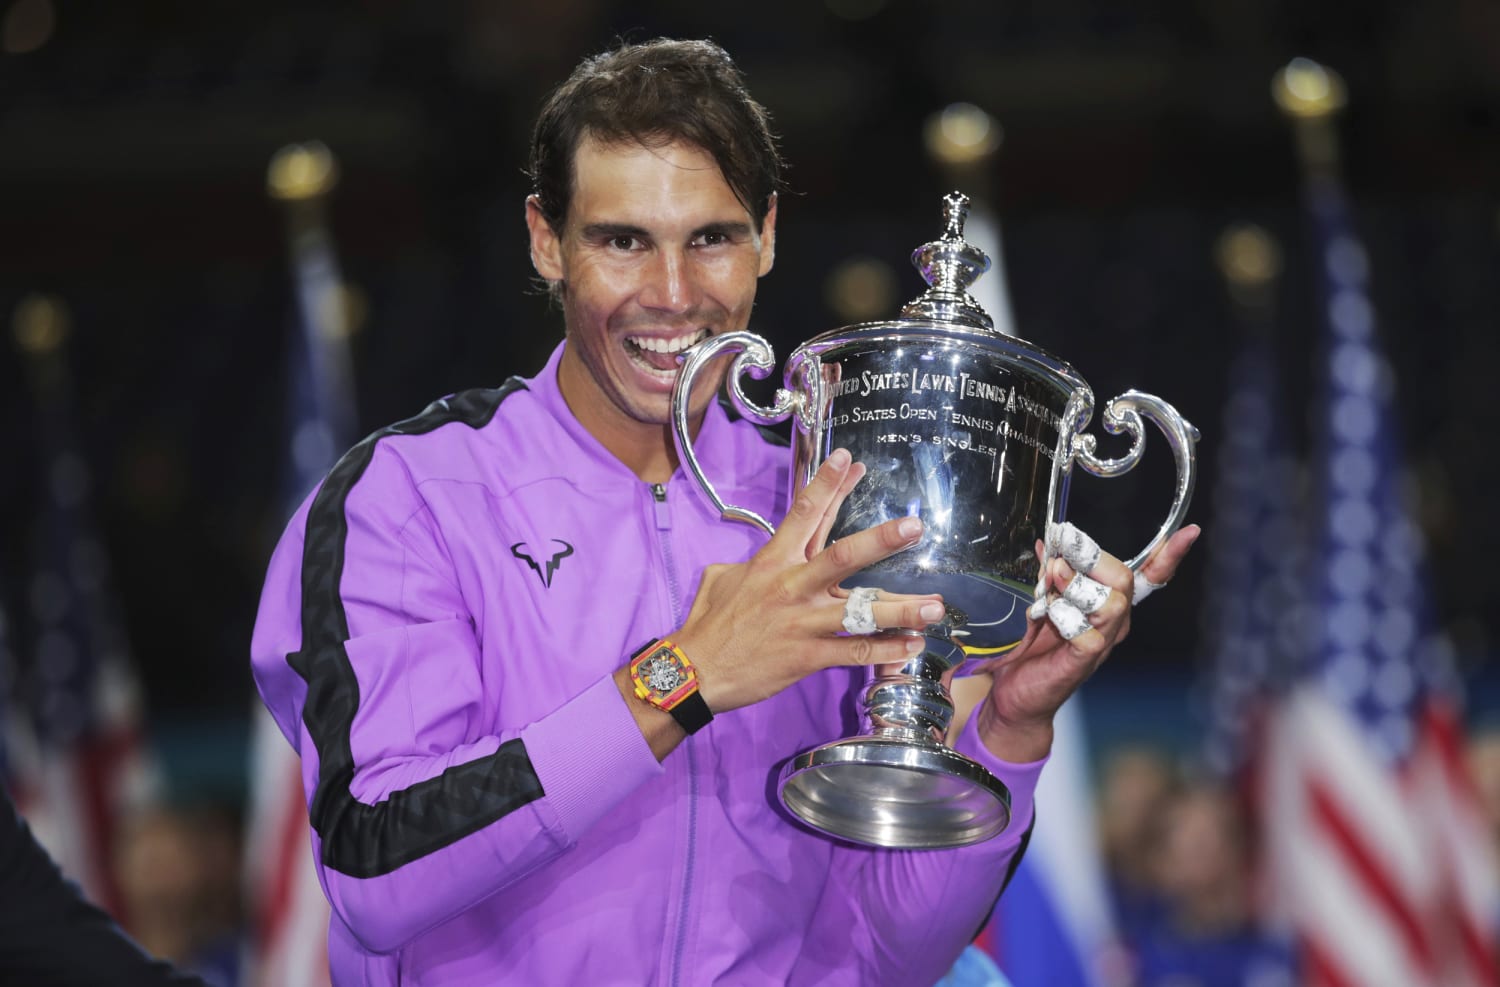 græsplæne Oprigtighed stempel Rafael Nadal to skip U.S. Open due to coronavirus concerns